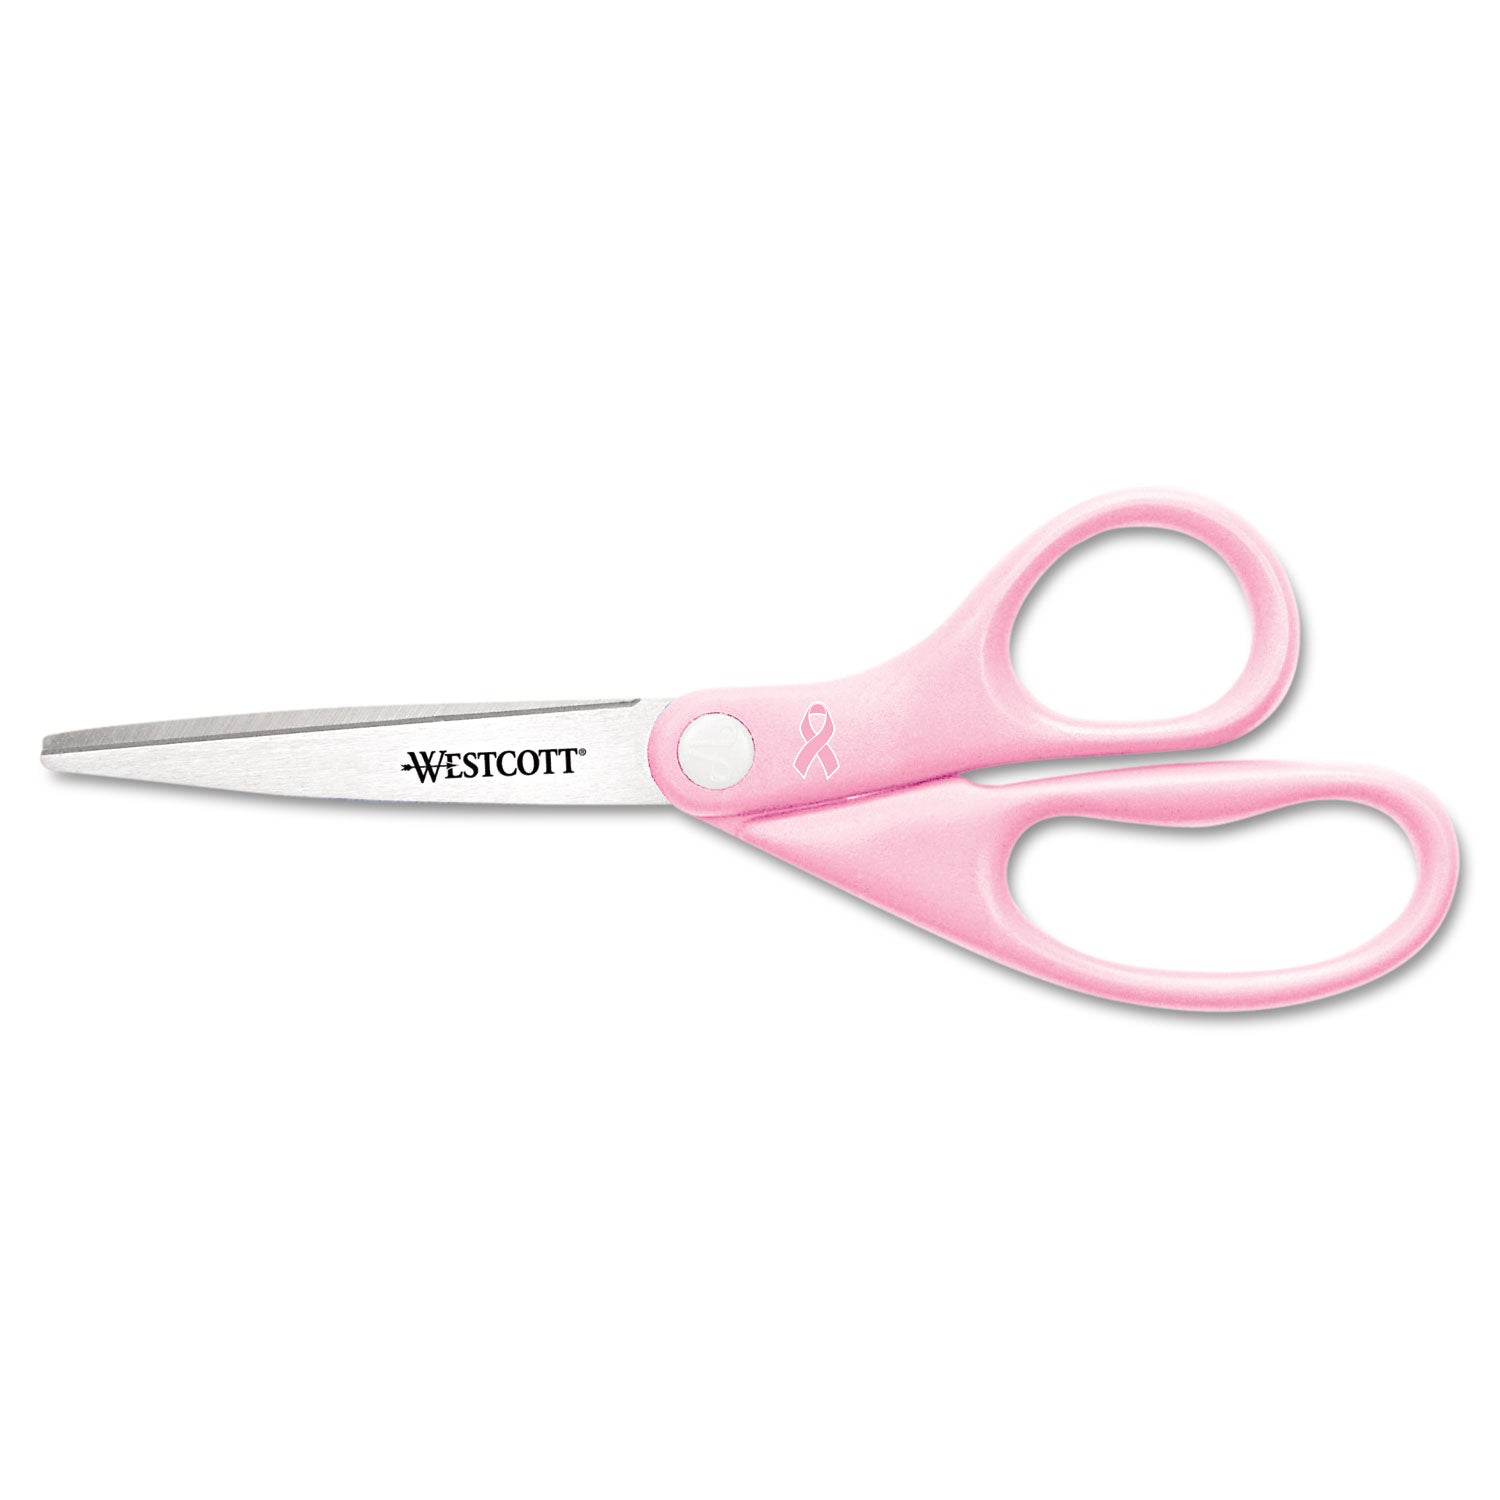 All Purpose Pink Ribbon Scissors, 8" Long, 3.5" Cut Length, Pink Straight Handle - 